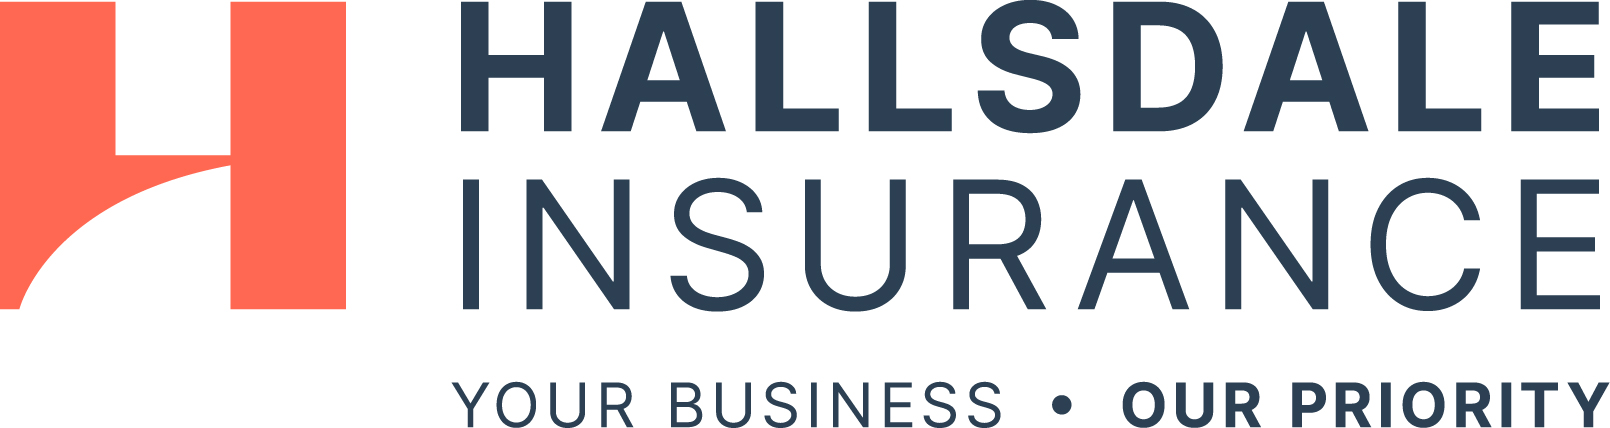 Hallsdale Insurance